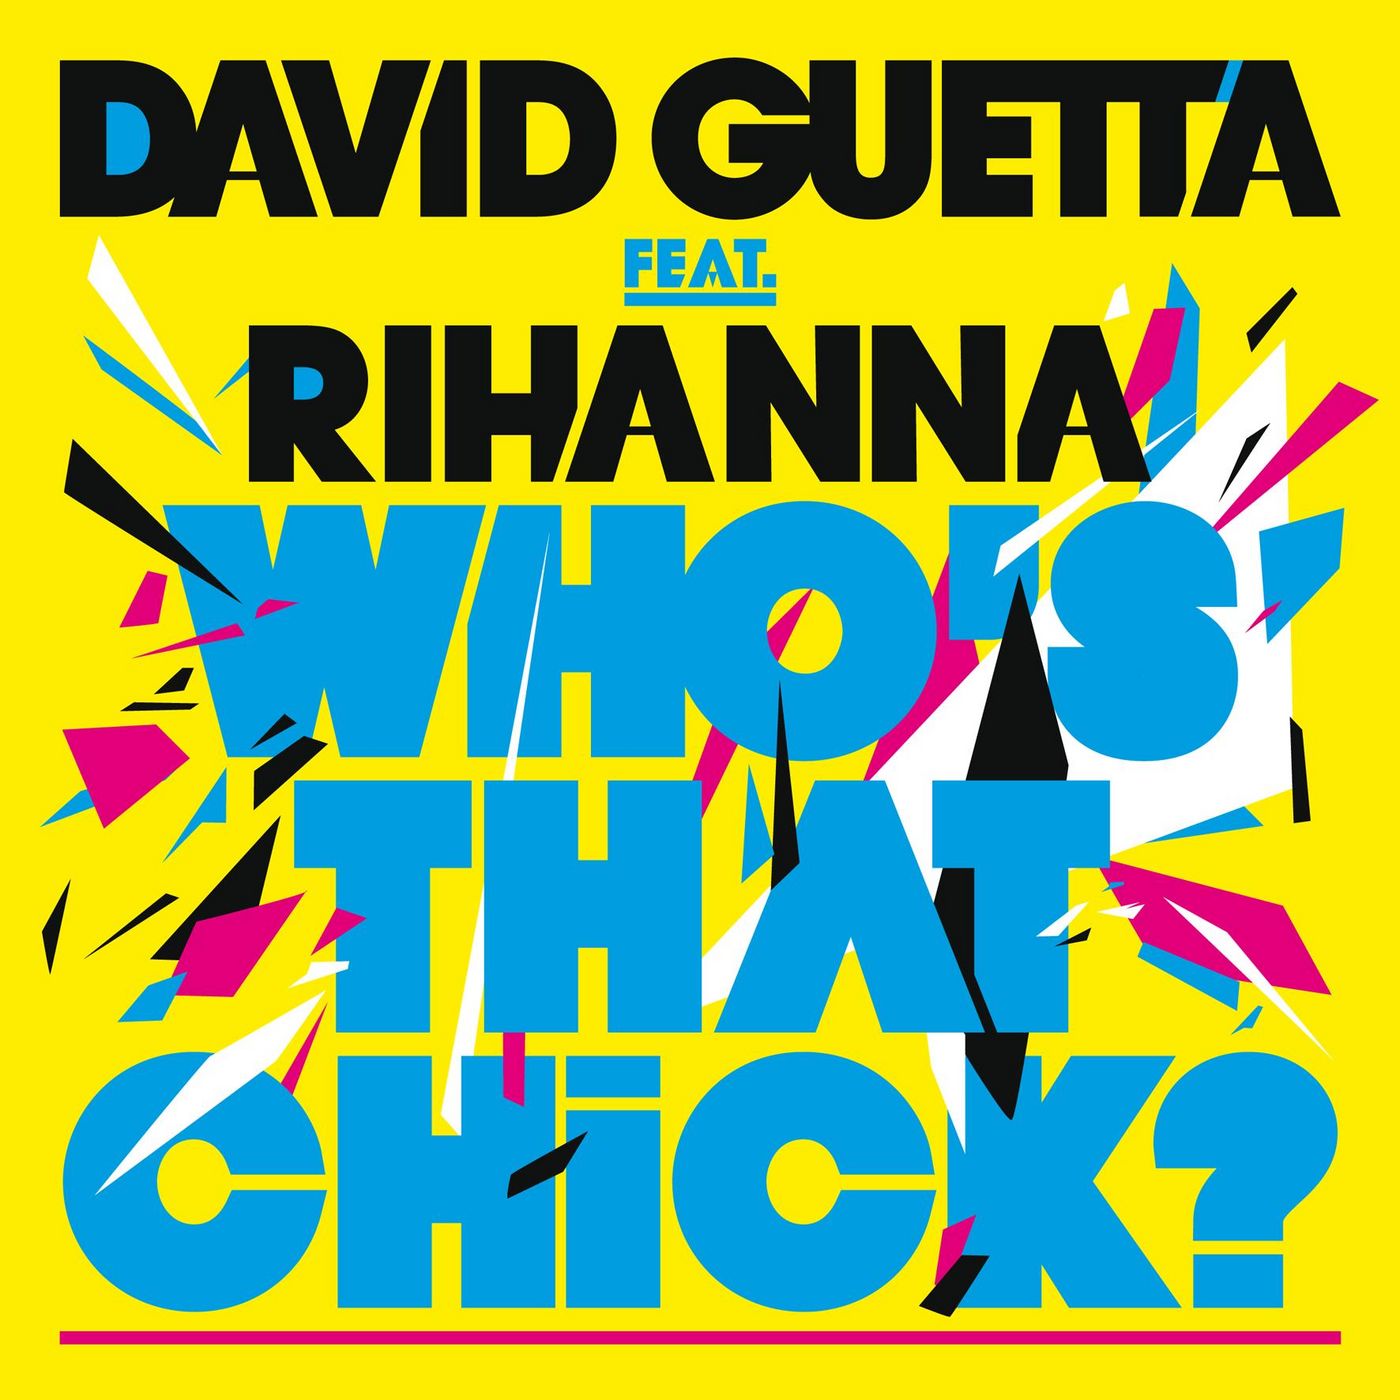 http://2.bp.blogspot.com/-rImlk8iwzio/T11i_pGoLGI/AAAAAAAAAvY/T8R-sEuaRtM/s1600/David-Guetta-Ft-Rihanna-Whos-That-Chick.jpg